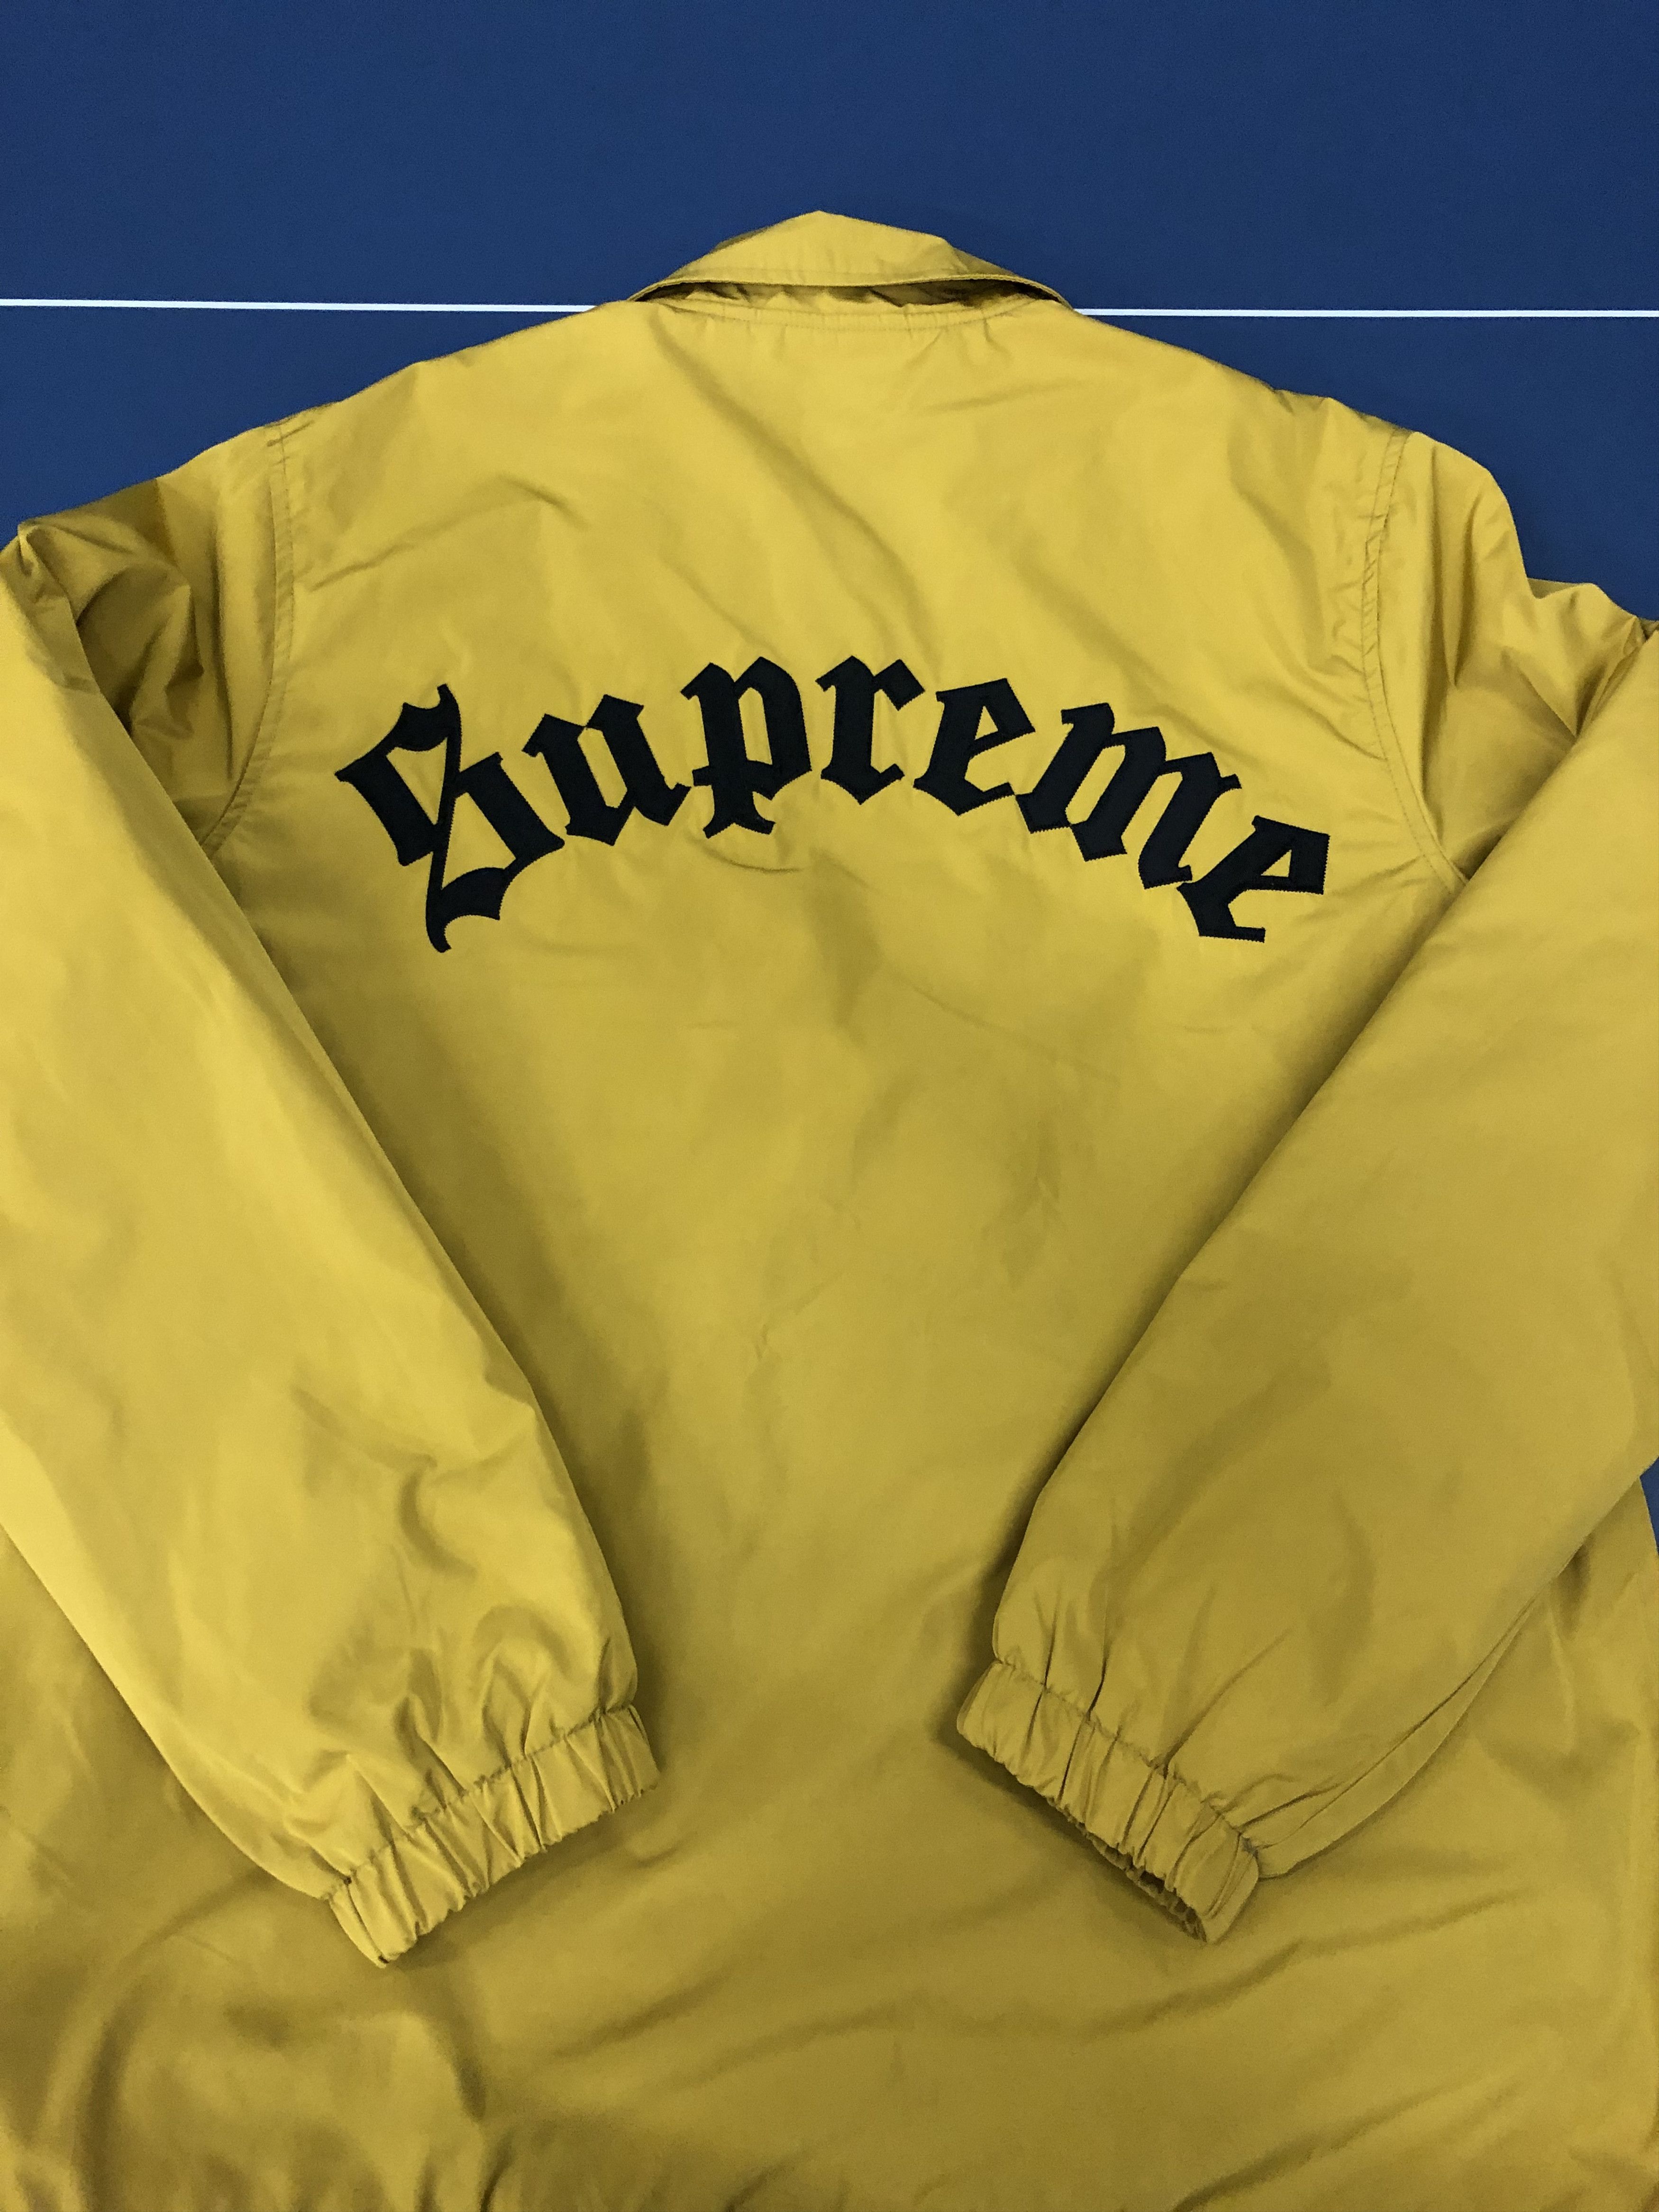 Supreme Supreme Old English Coaches Yellow Gold Jacket FW16 | Grailed